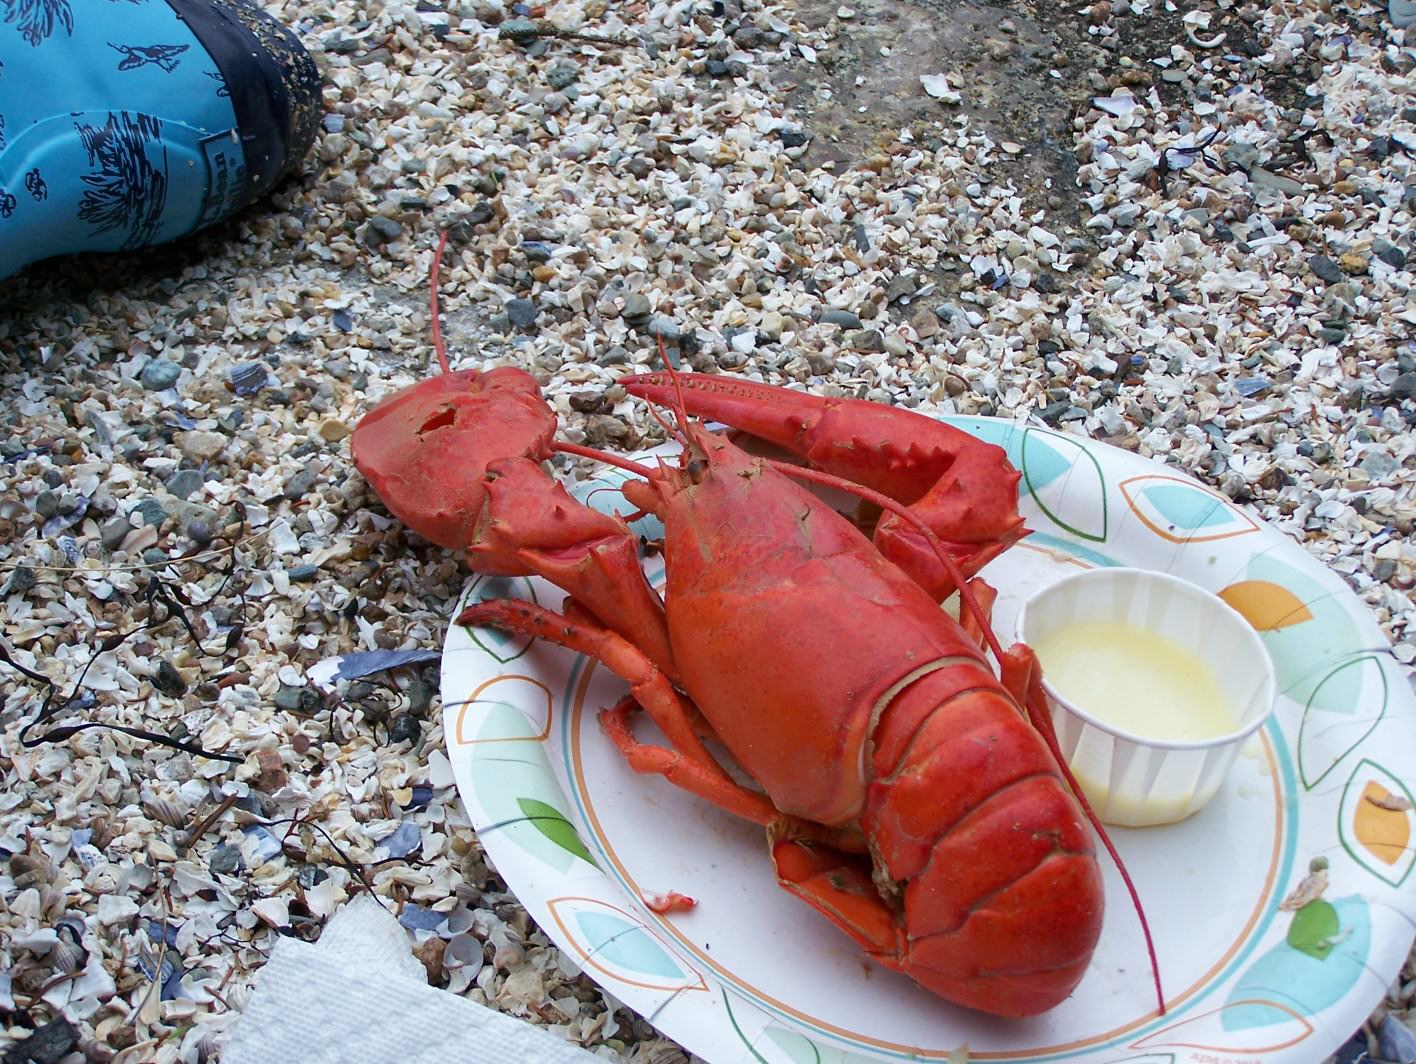 Lobster #1; photo by L. Goldman